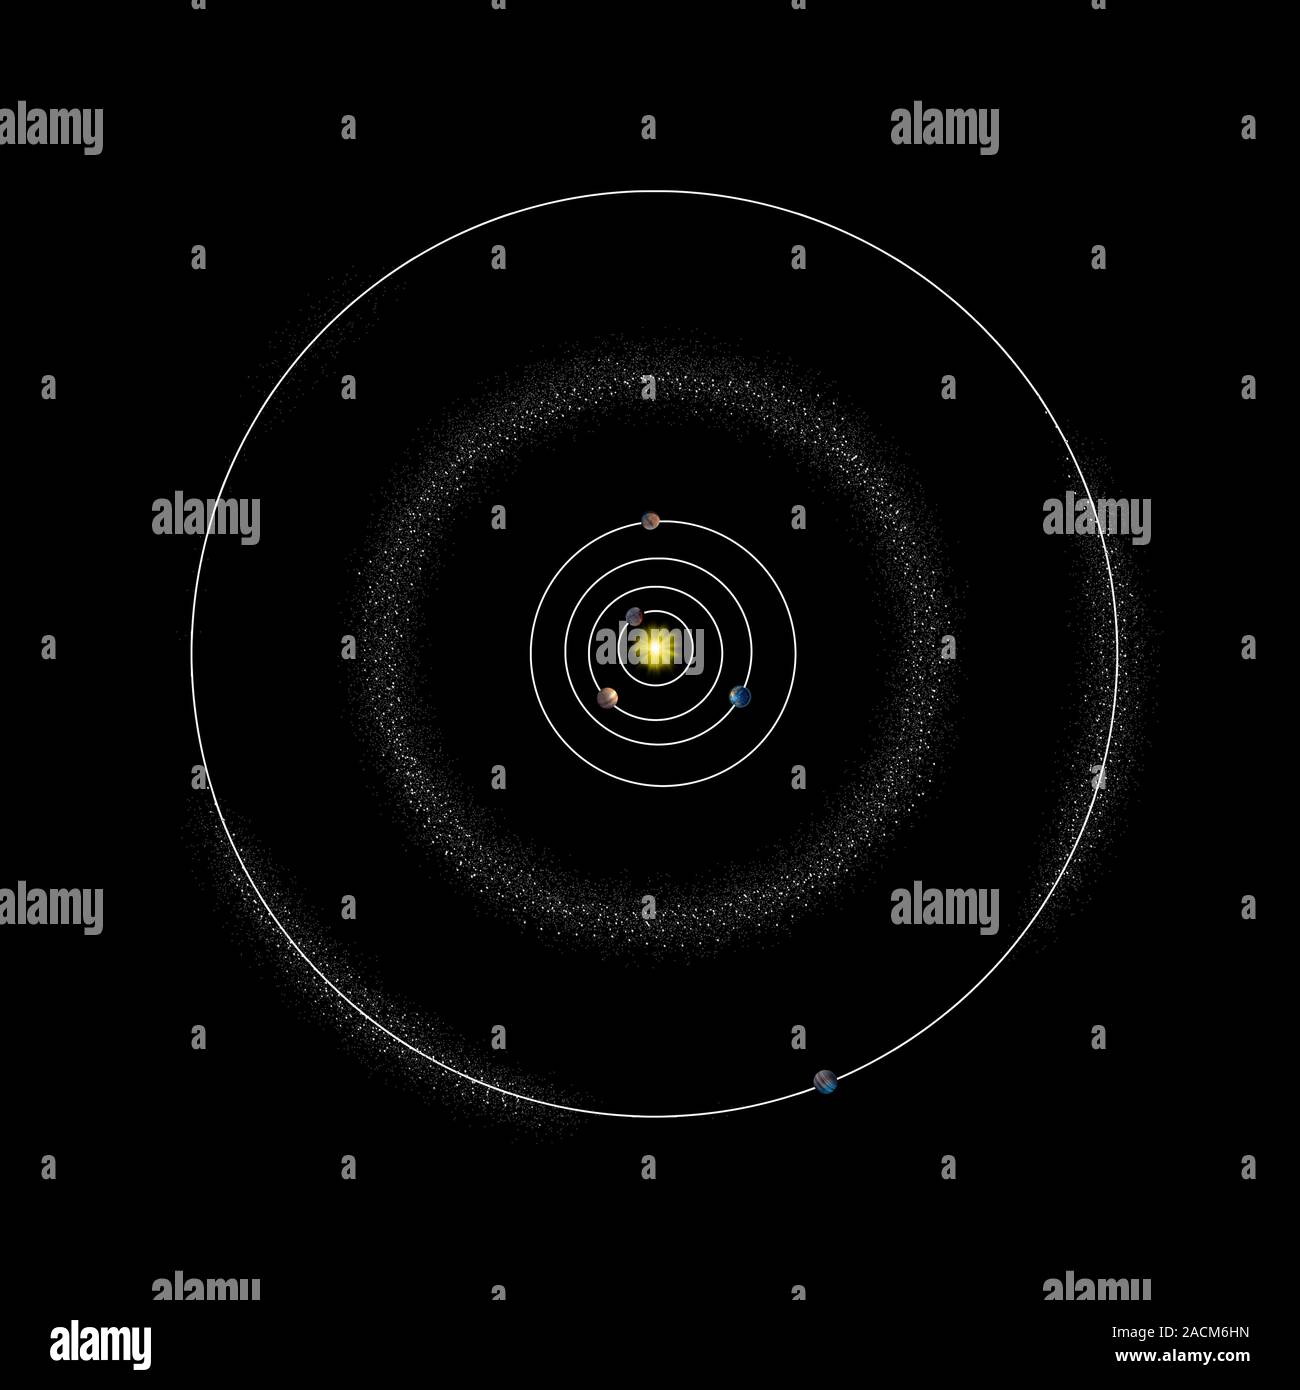 asteroid belt location